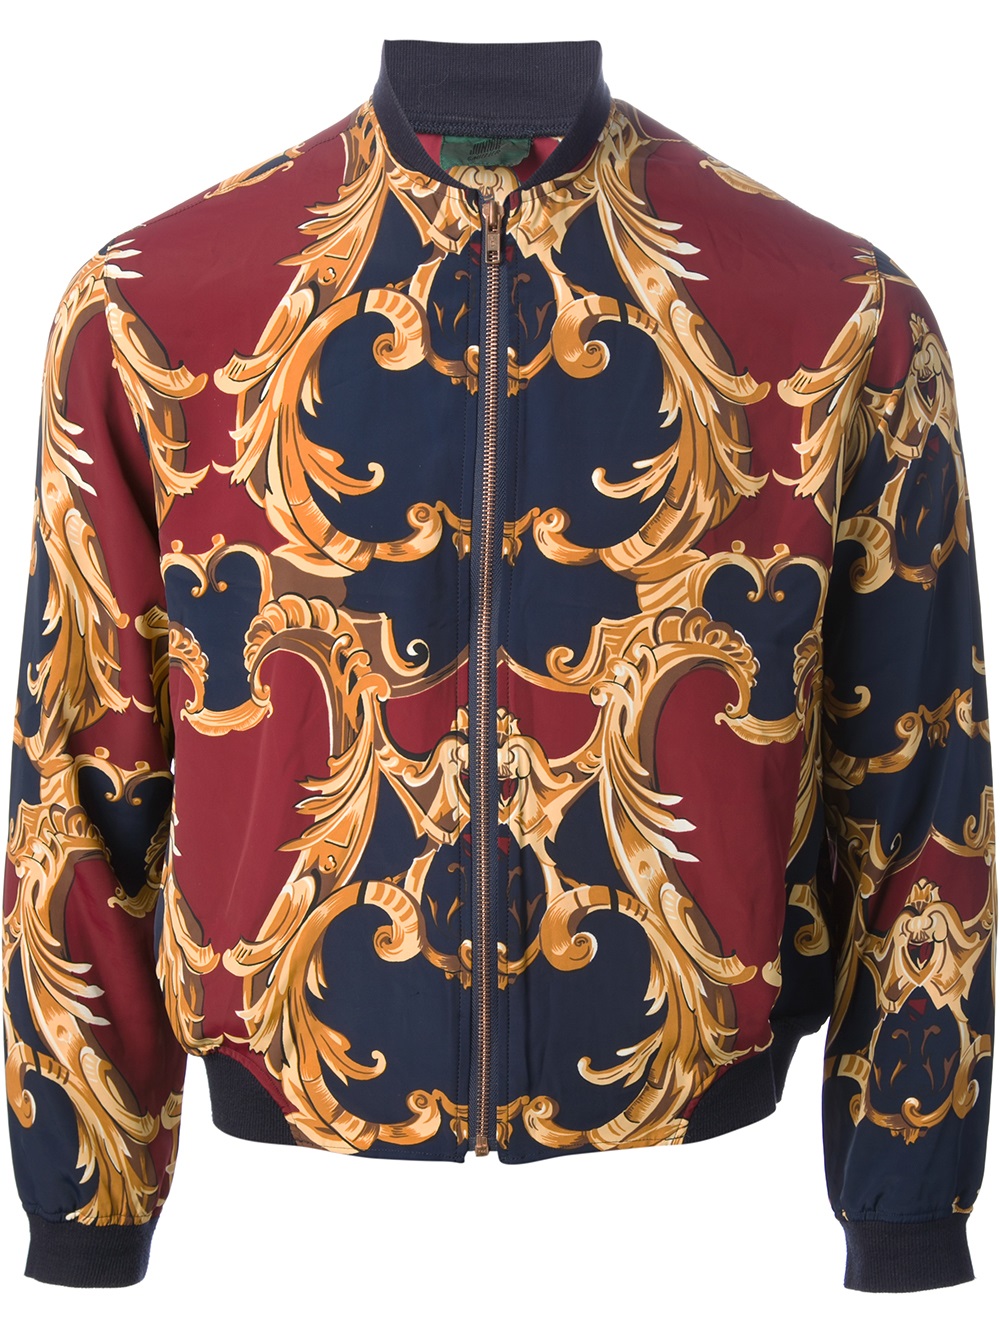 Jean paul gaultier Baroque Print Jacket in Red for Men | Lyst